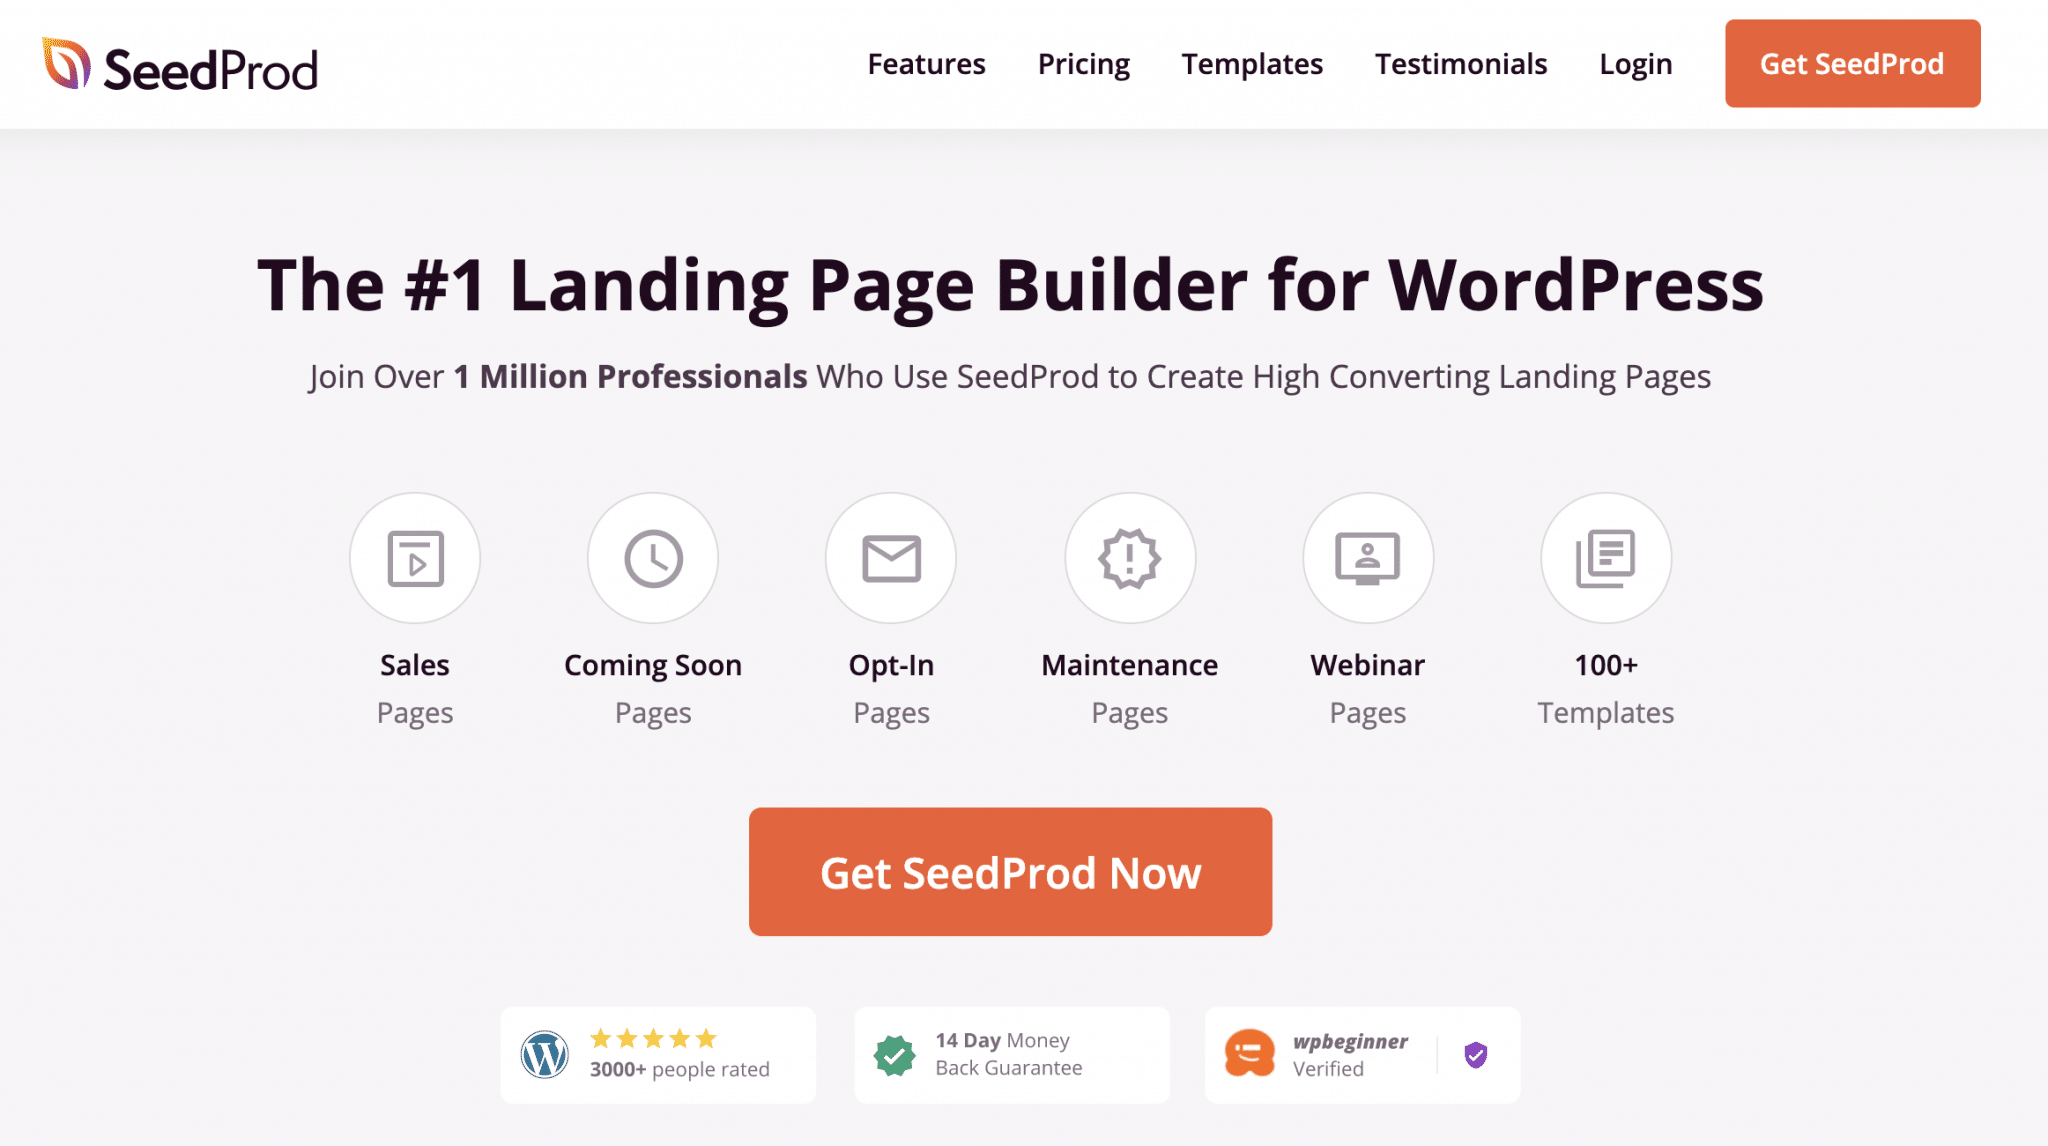 SeedProd landing page builder for WordPress.